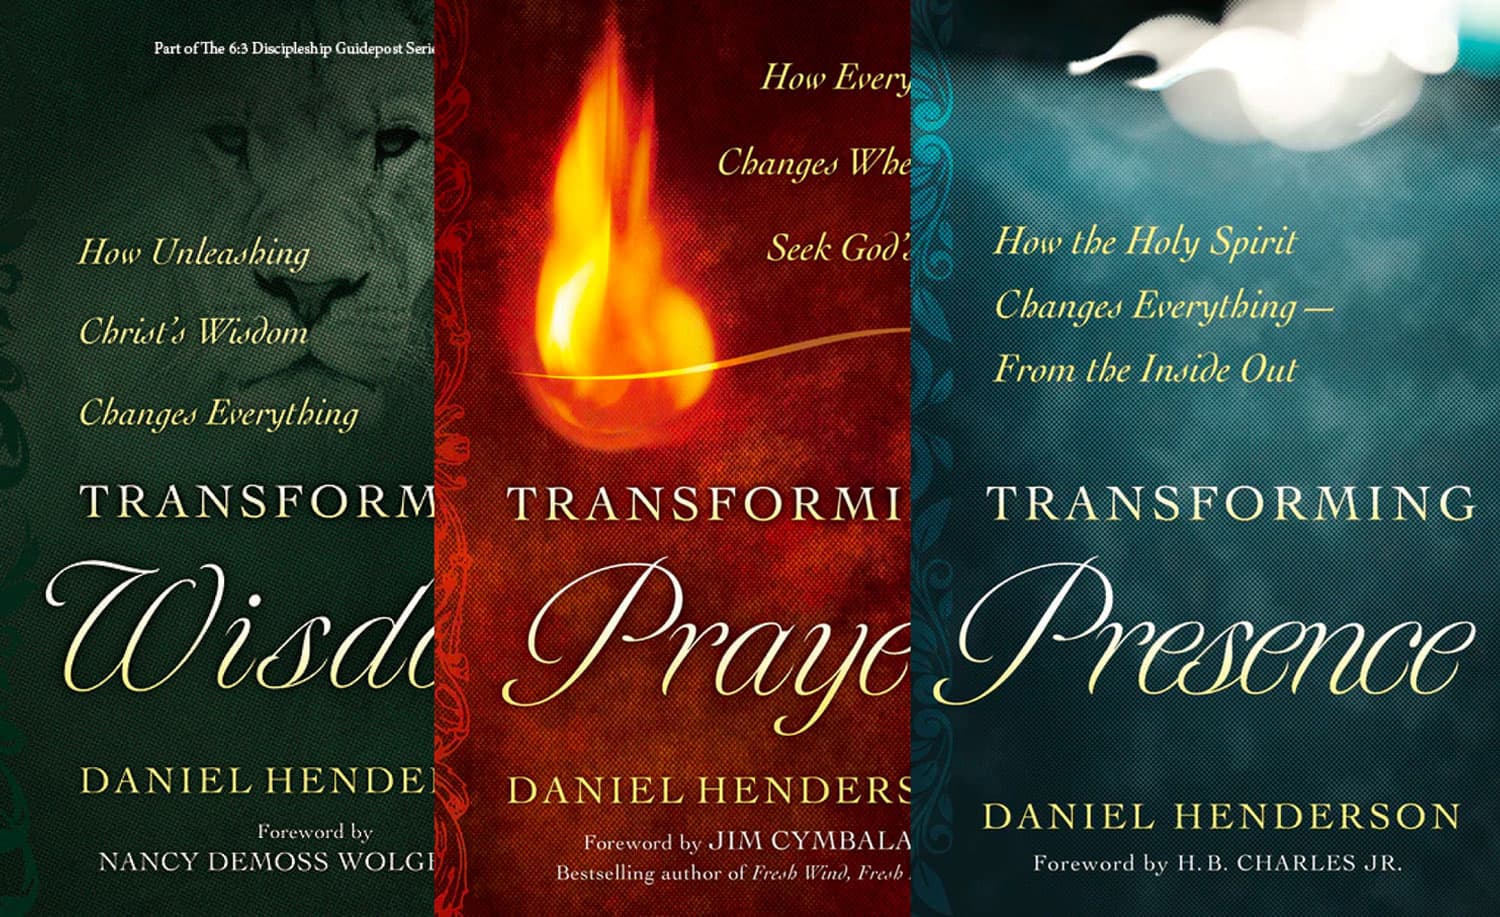 The Transforming Series by Daniel Henderson